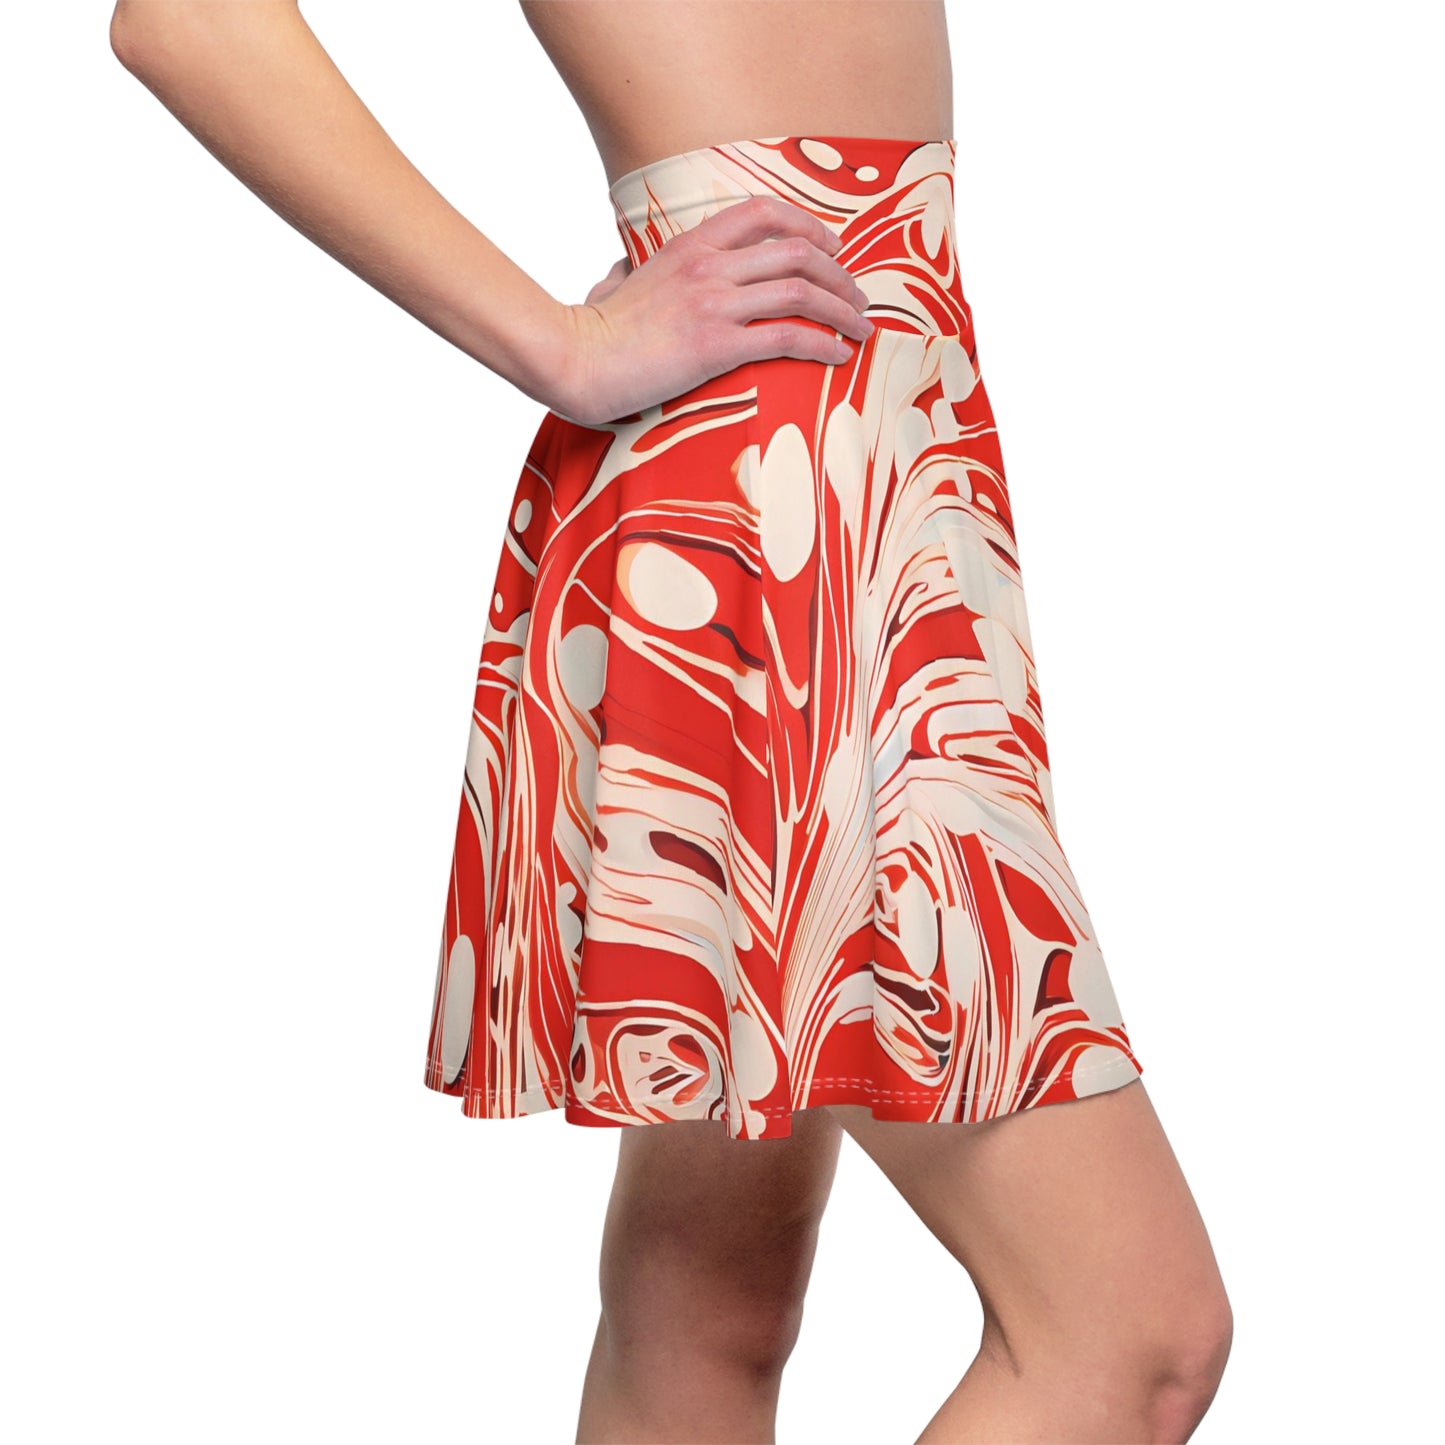 Red and White Swirls Skater Skirt